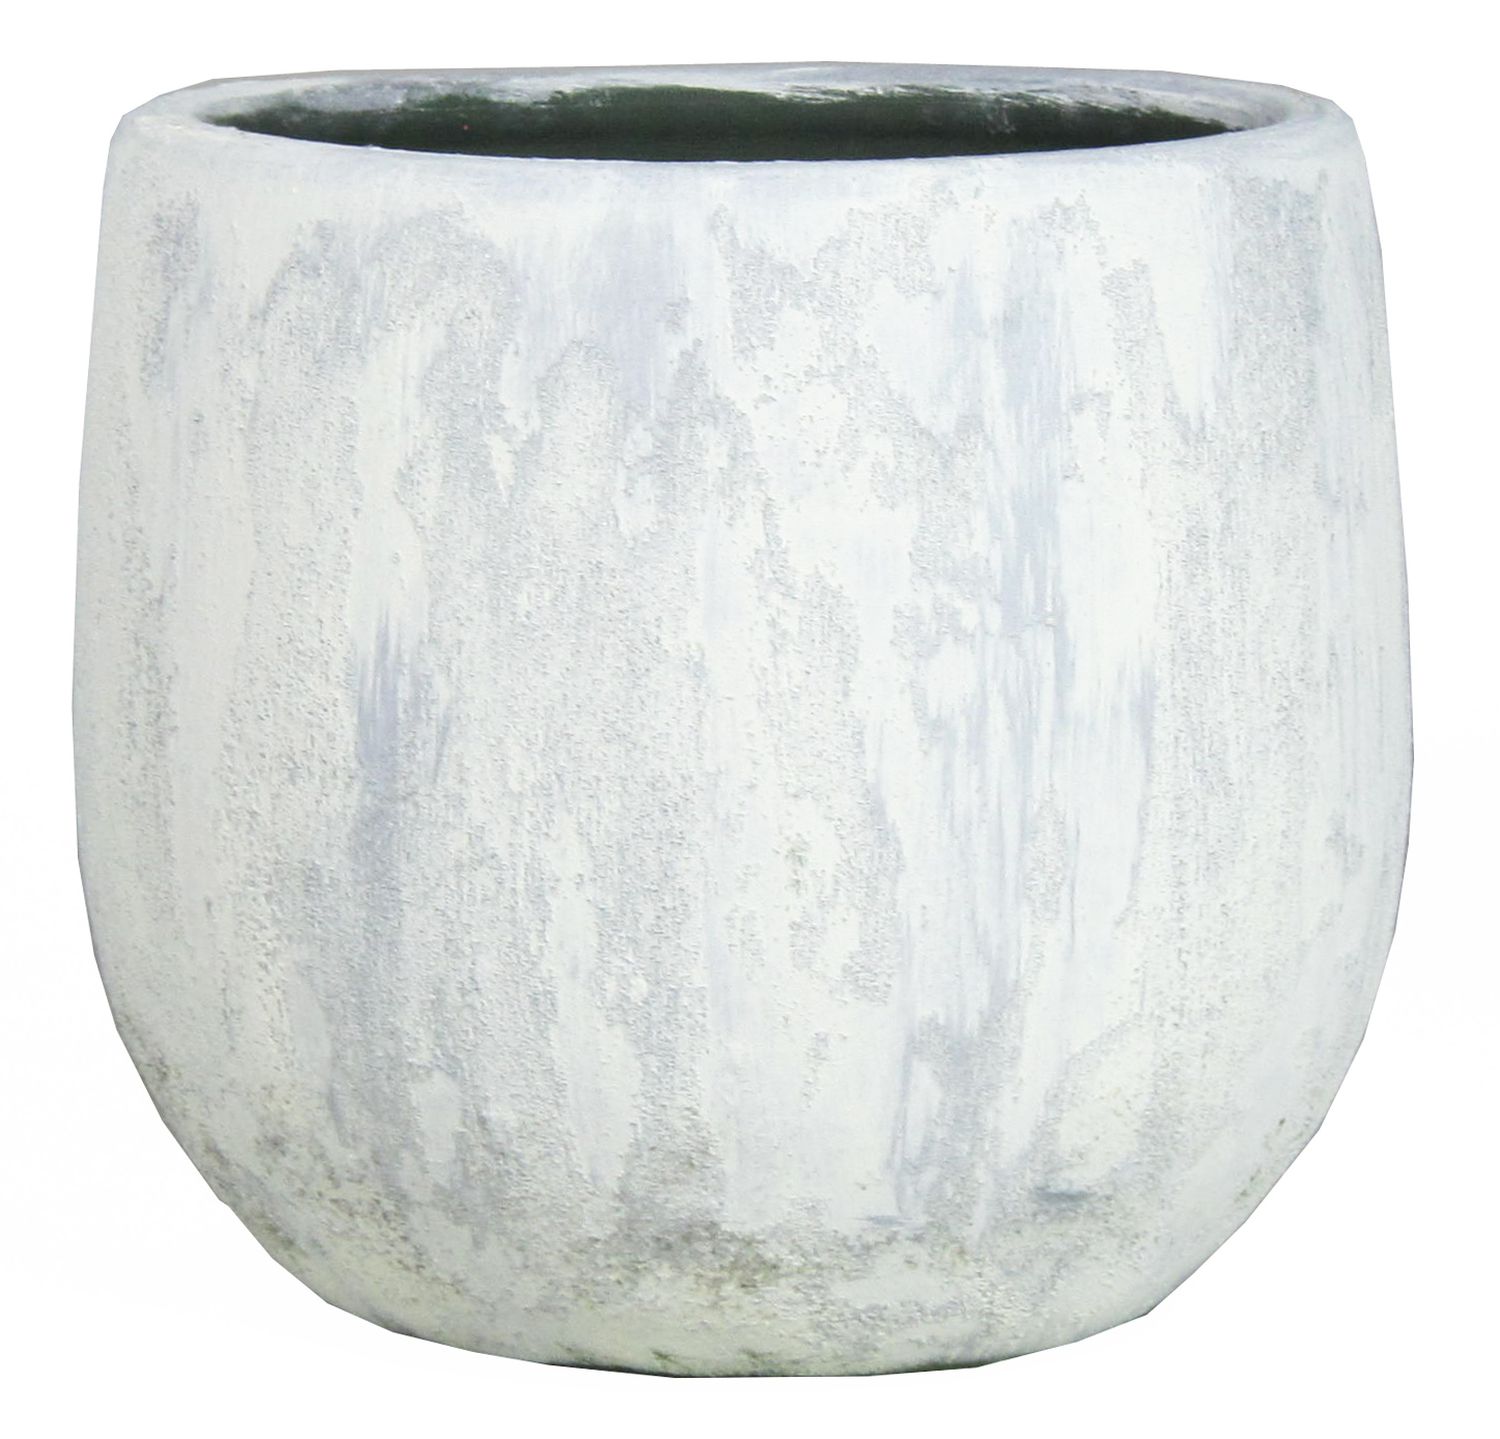 14cm, Übertopf Keramik Ø16cm Maserung, MORTAZA mit grau-weiß-eisblau,